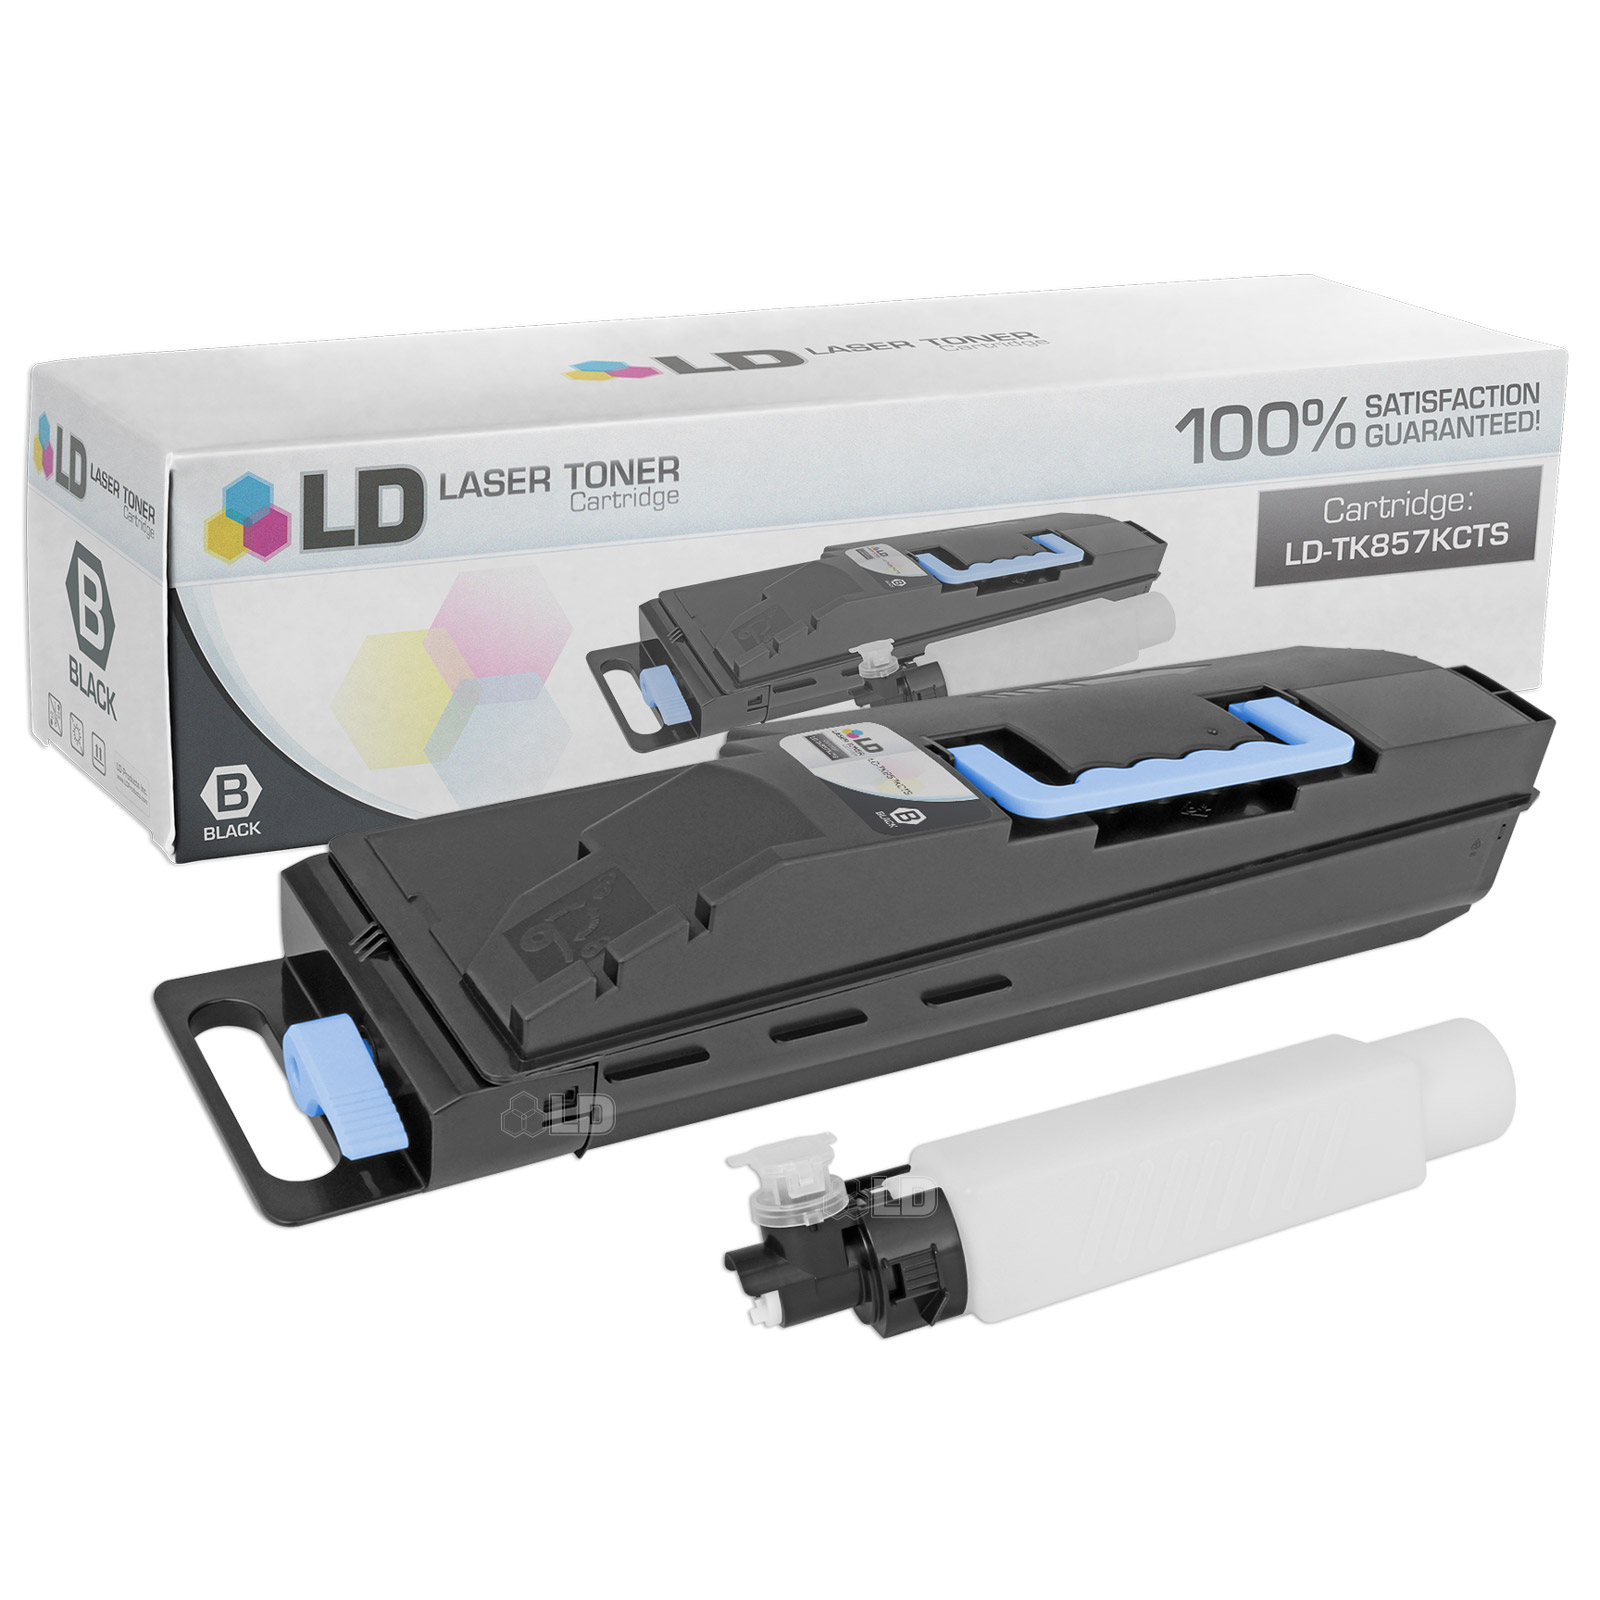 LD Compatible Replacement for Kyocera-Mita TK-857K Black Laser Toner Cartridge for use in Kyocera-Mita TASKalfa 400ci, 500ci, and 522ci s - image 1 of 1